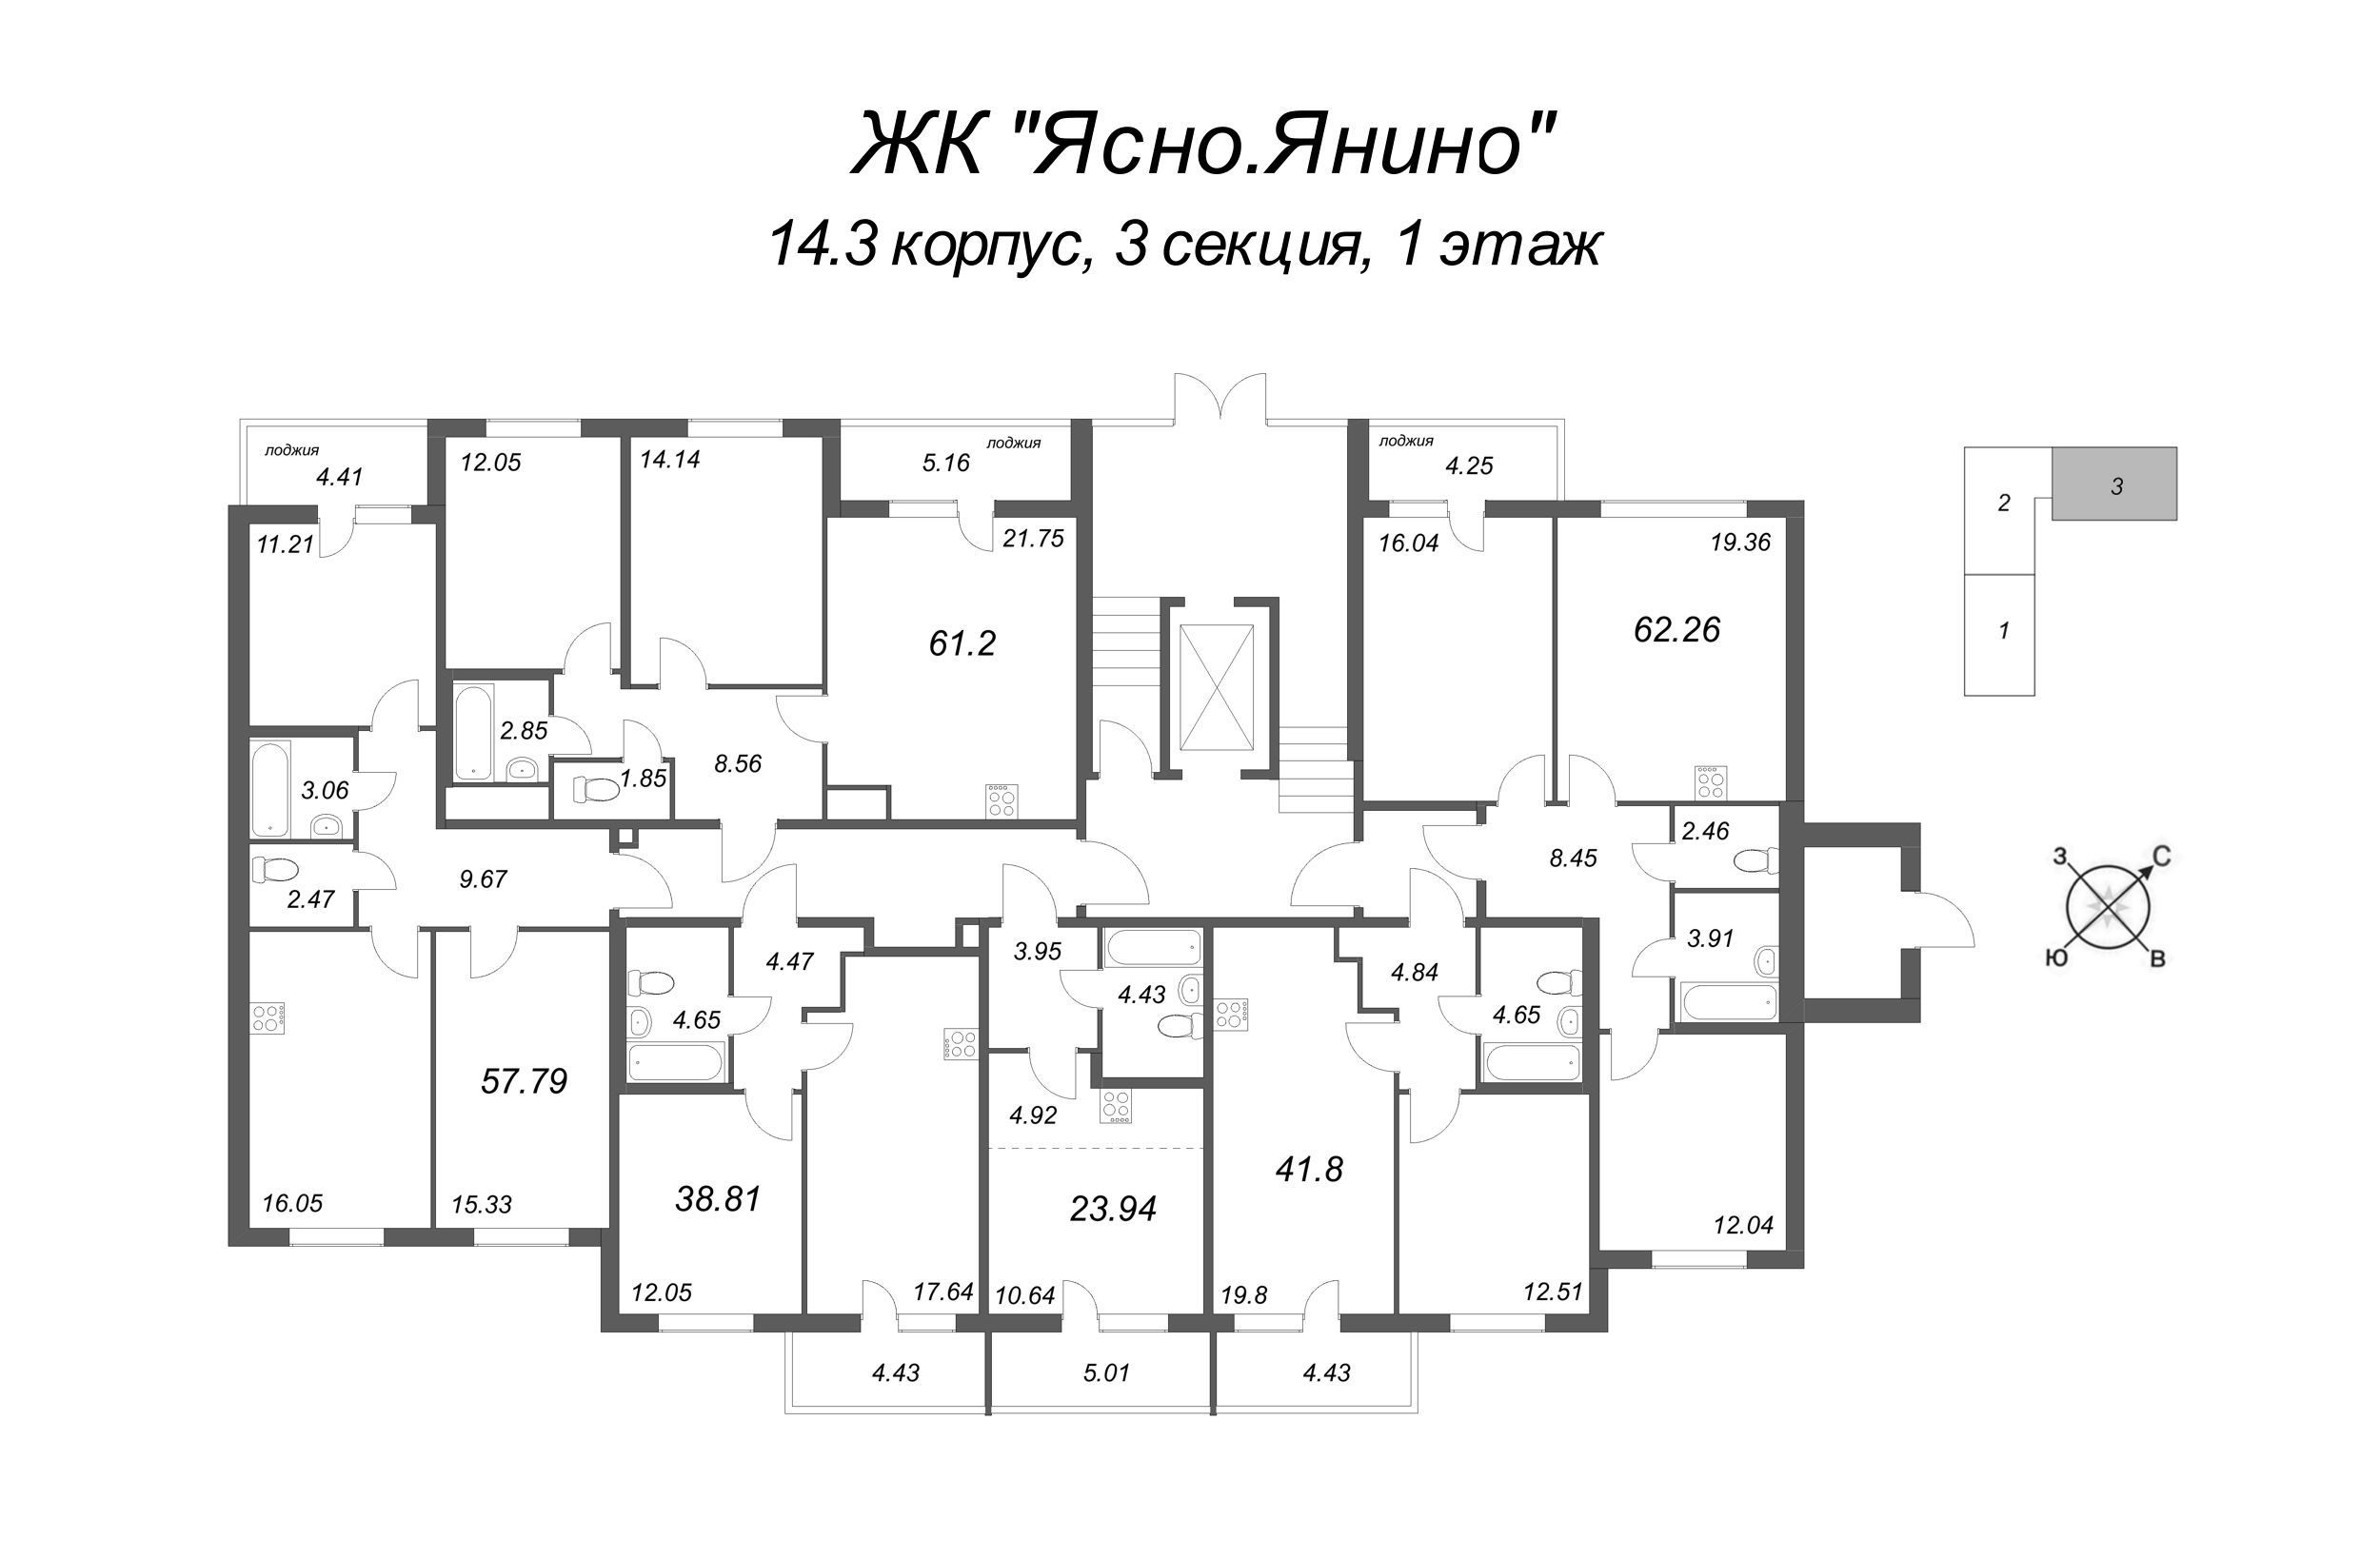 2-комнатная квартира, 57.79 м² в ЖК "Ясно.Янино" - планировка этажа